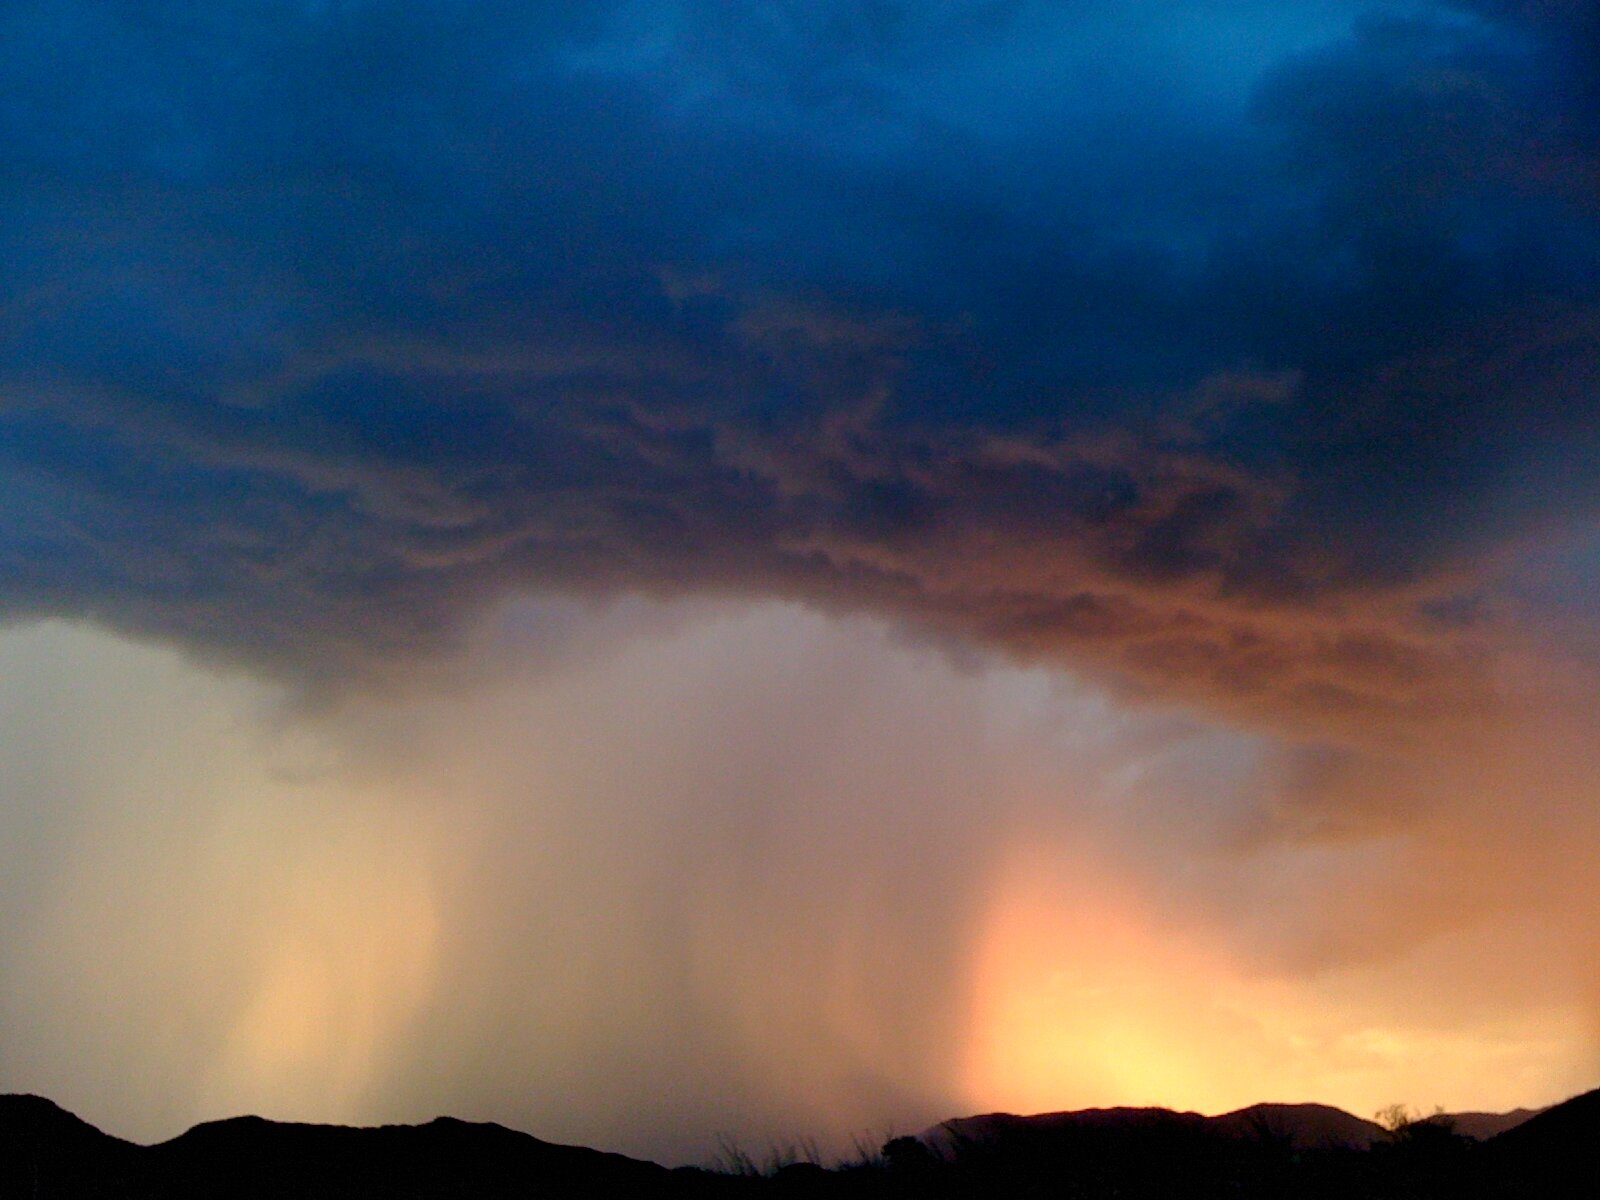  Stratocumulus cloudburst with outflow, Ravenrock, Southern Arizona, USA , by Roseann Hanson 